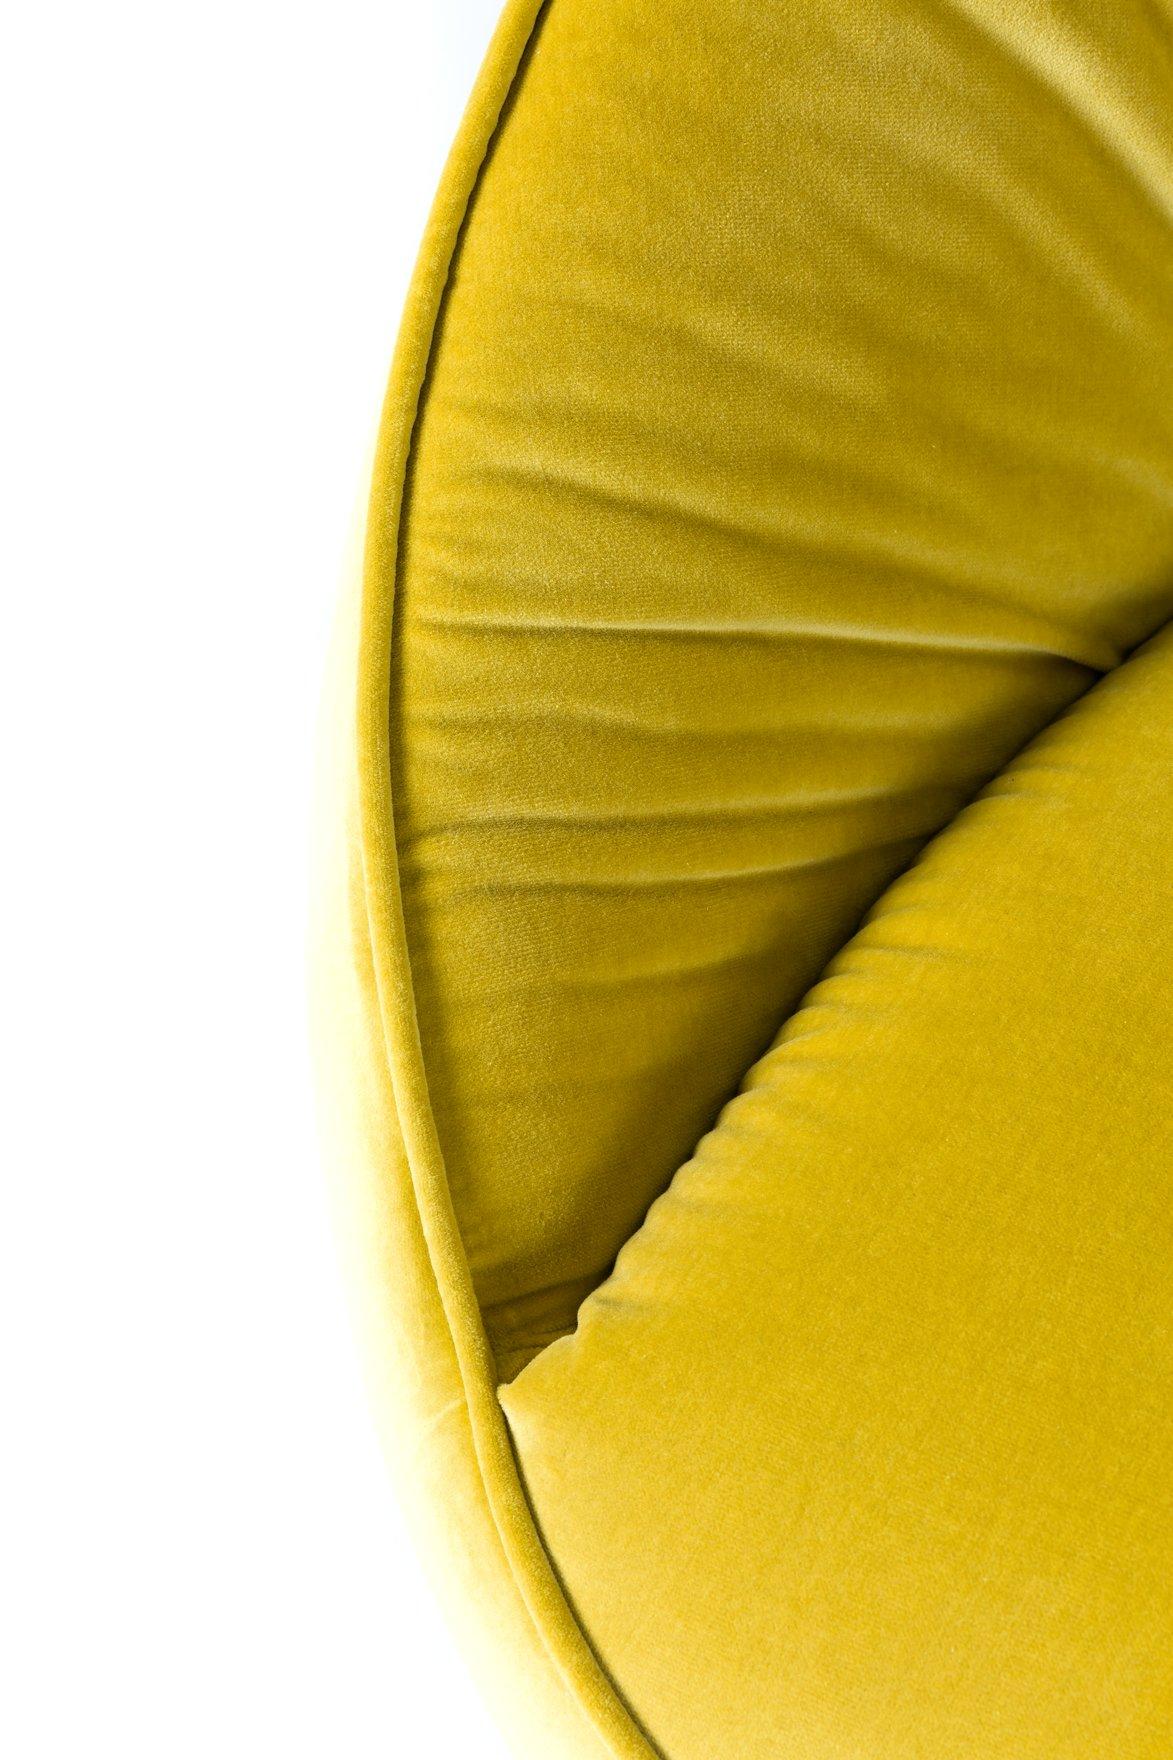 Dutch Moooi Hana Wingback Chair in Harald 3, 443 Yellow Upholstery For Sale